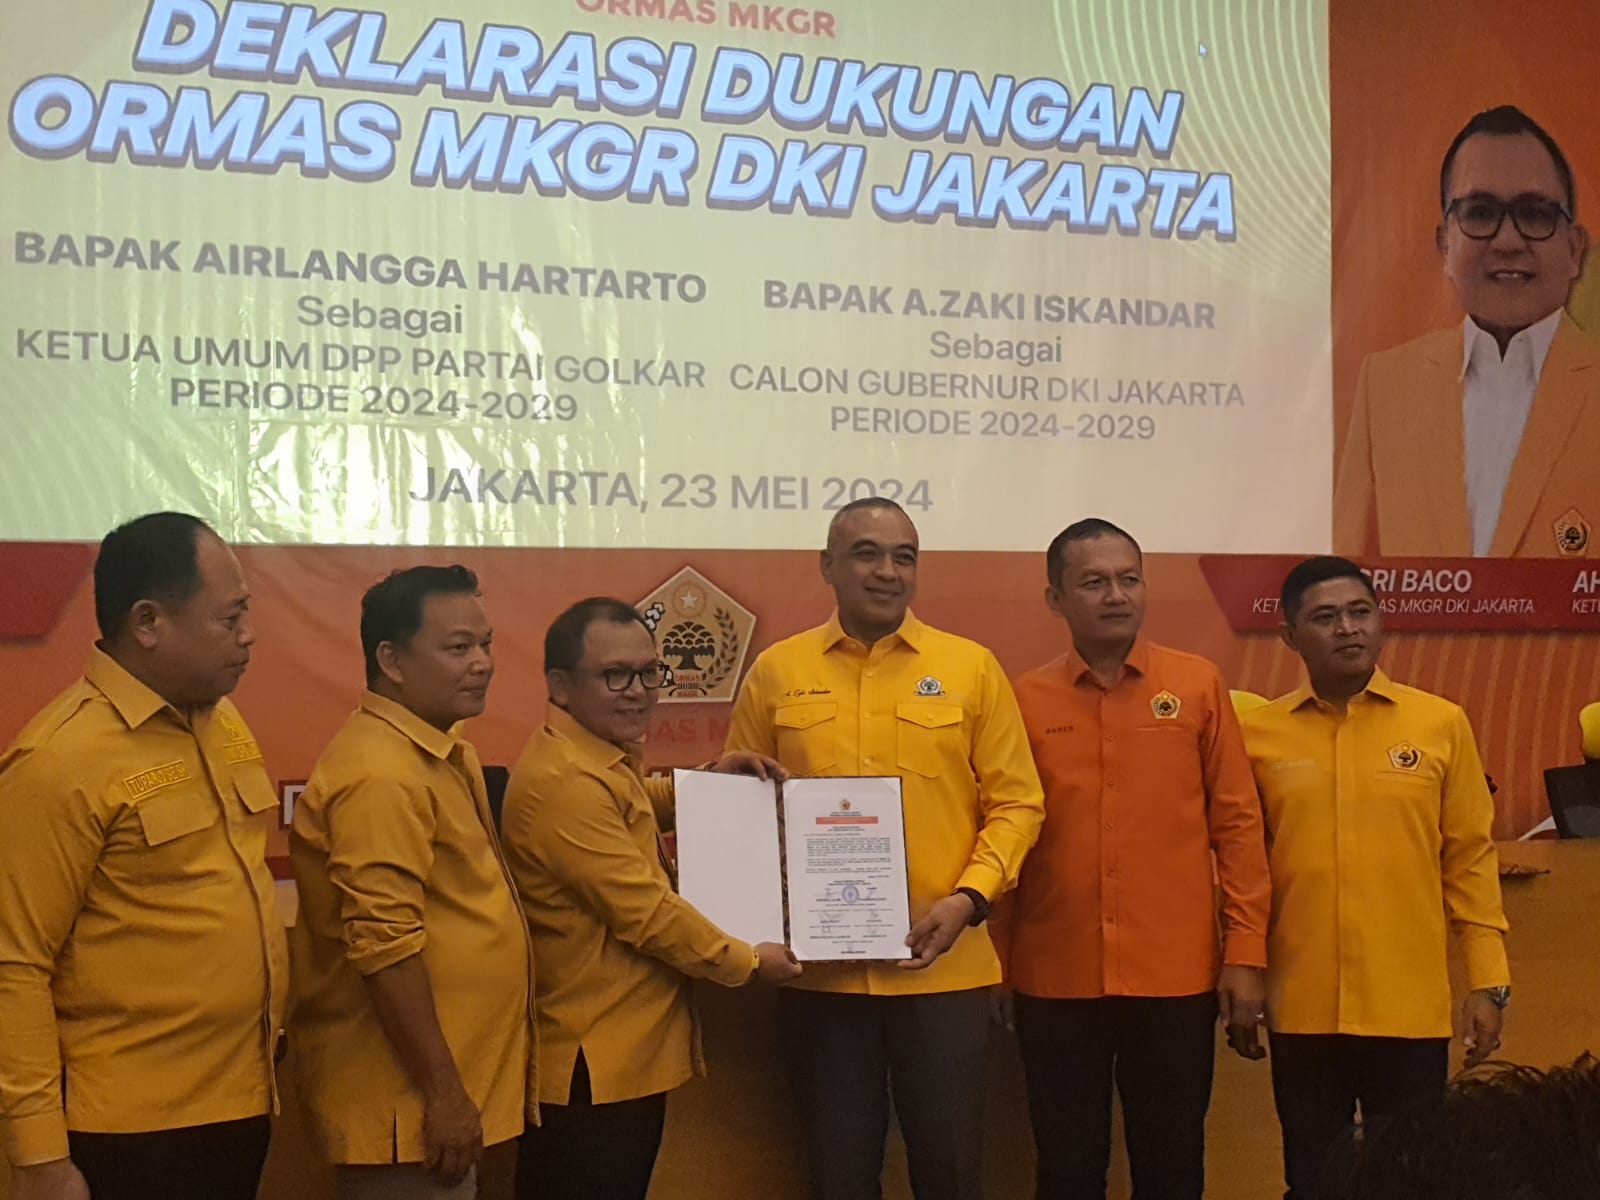 Resmi, Ormas MKGR Deklarasi Dukung Zaki Iskandar Maju Pilkada Jakarta 2024